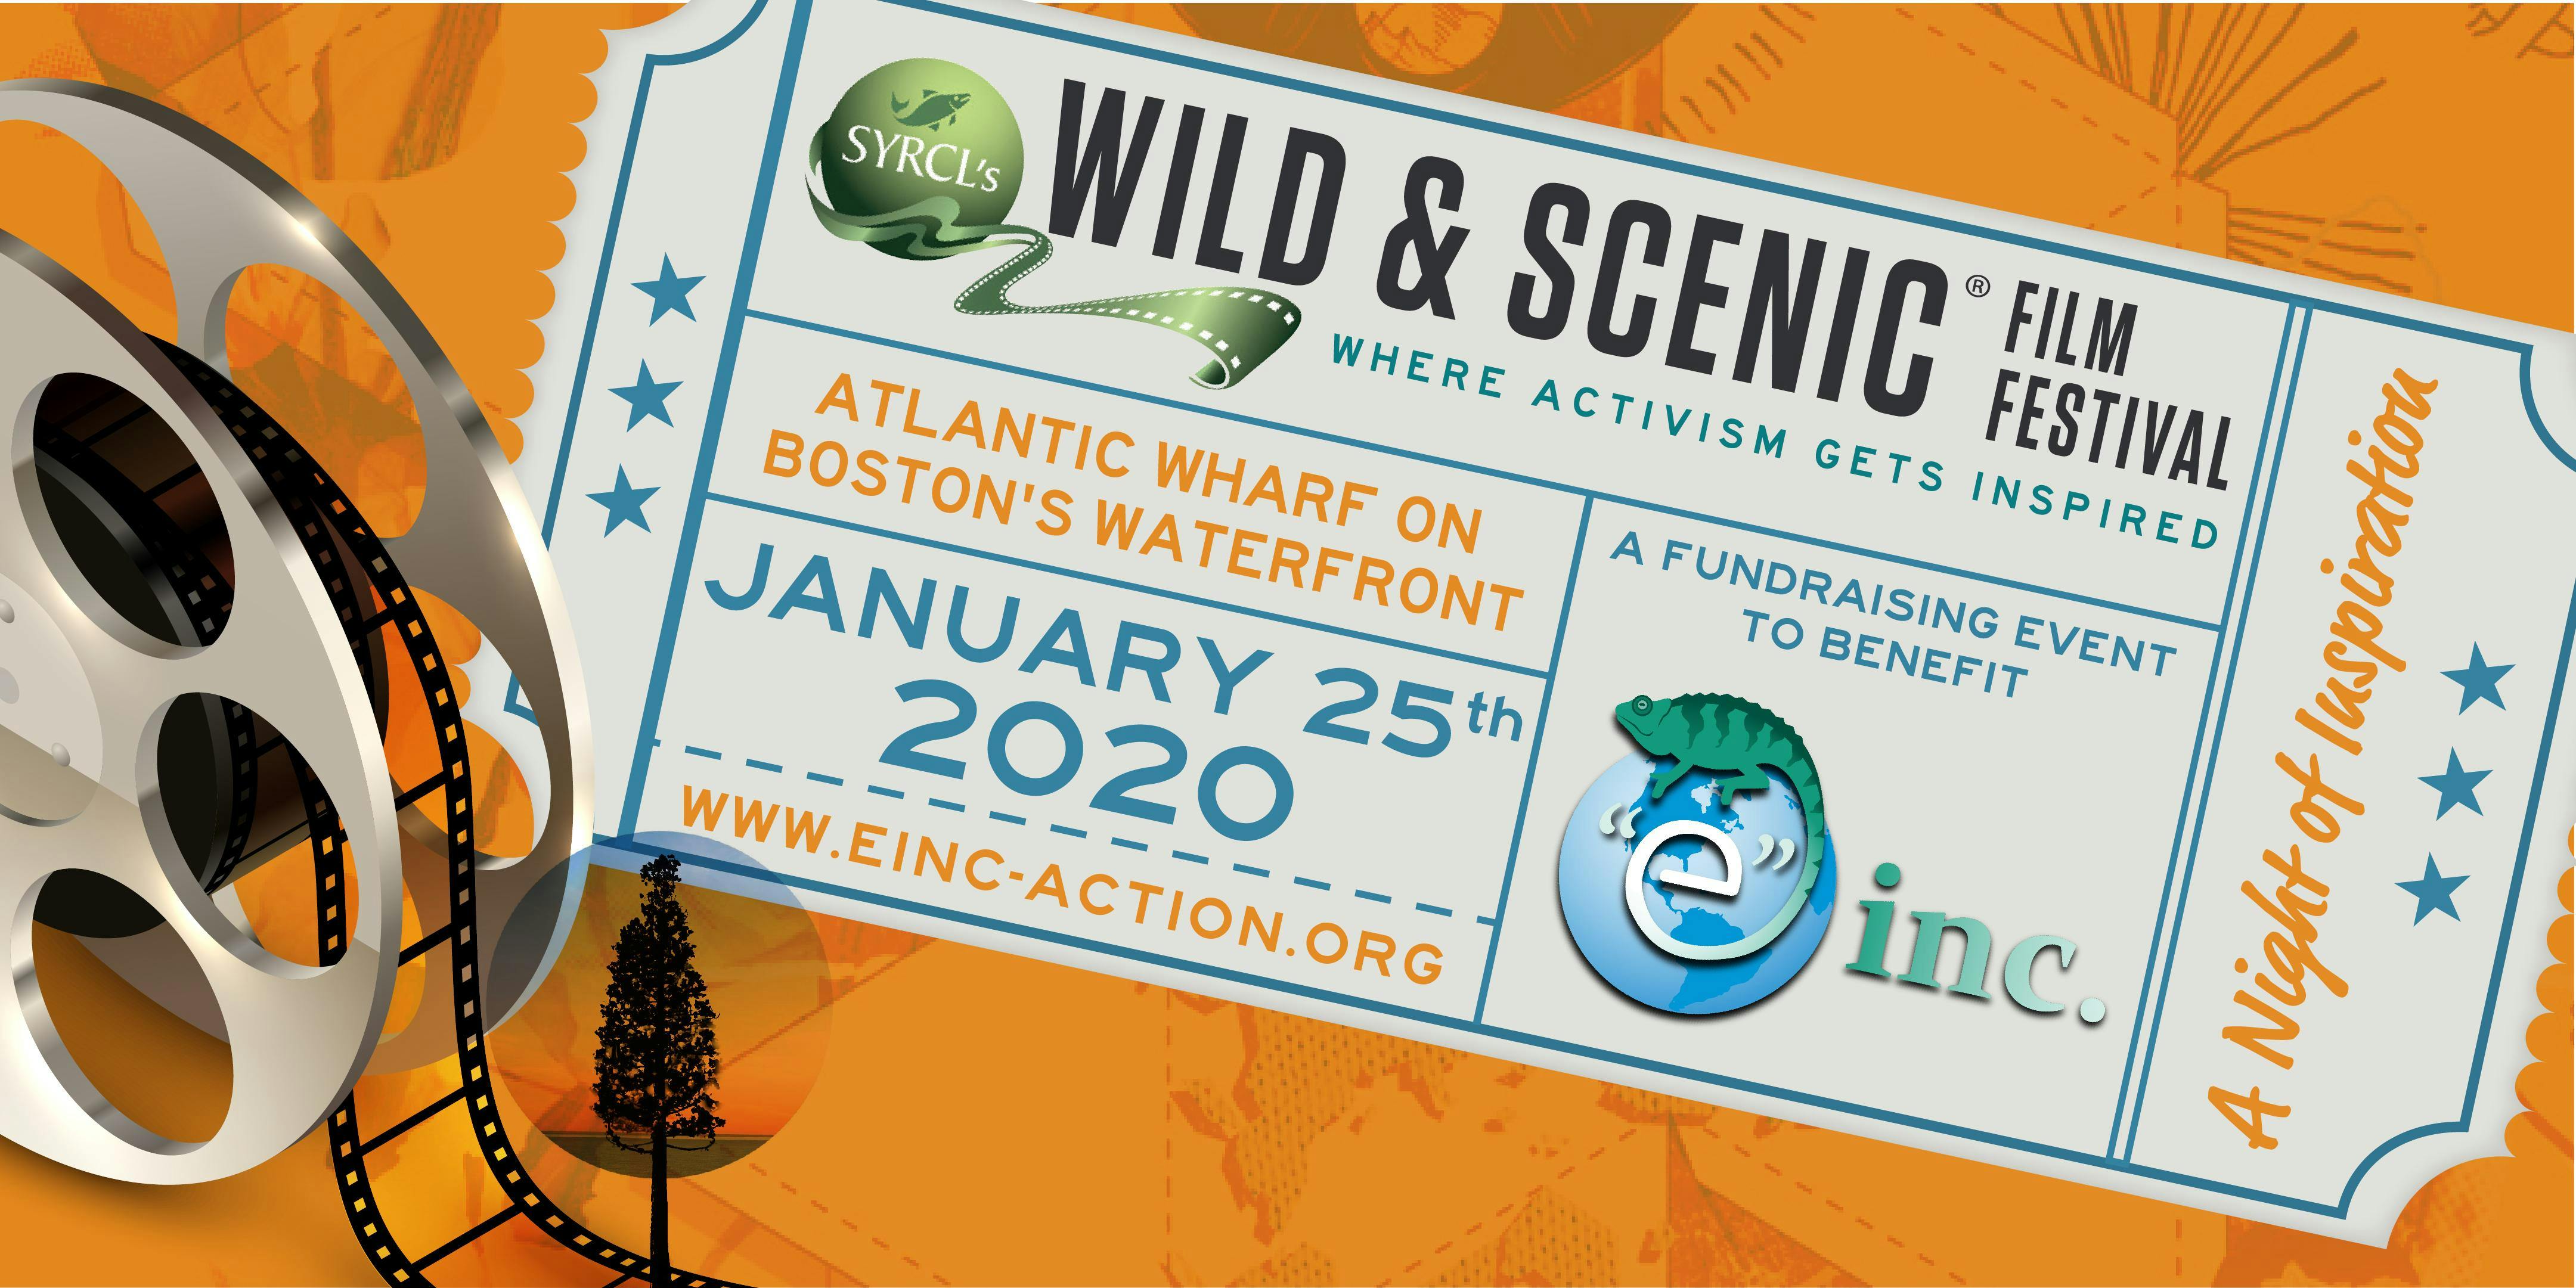 Wild and Scenic Film Festival - Fundraising Event